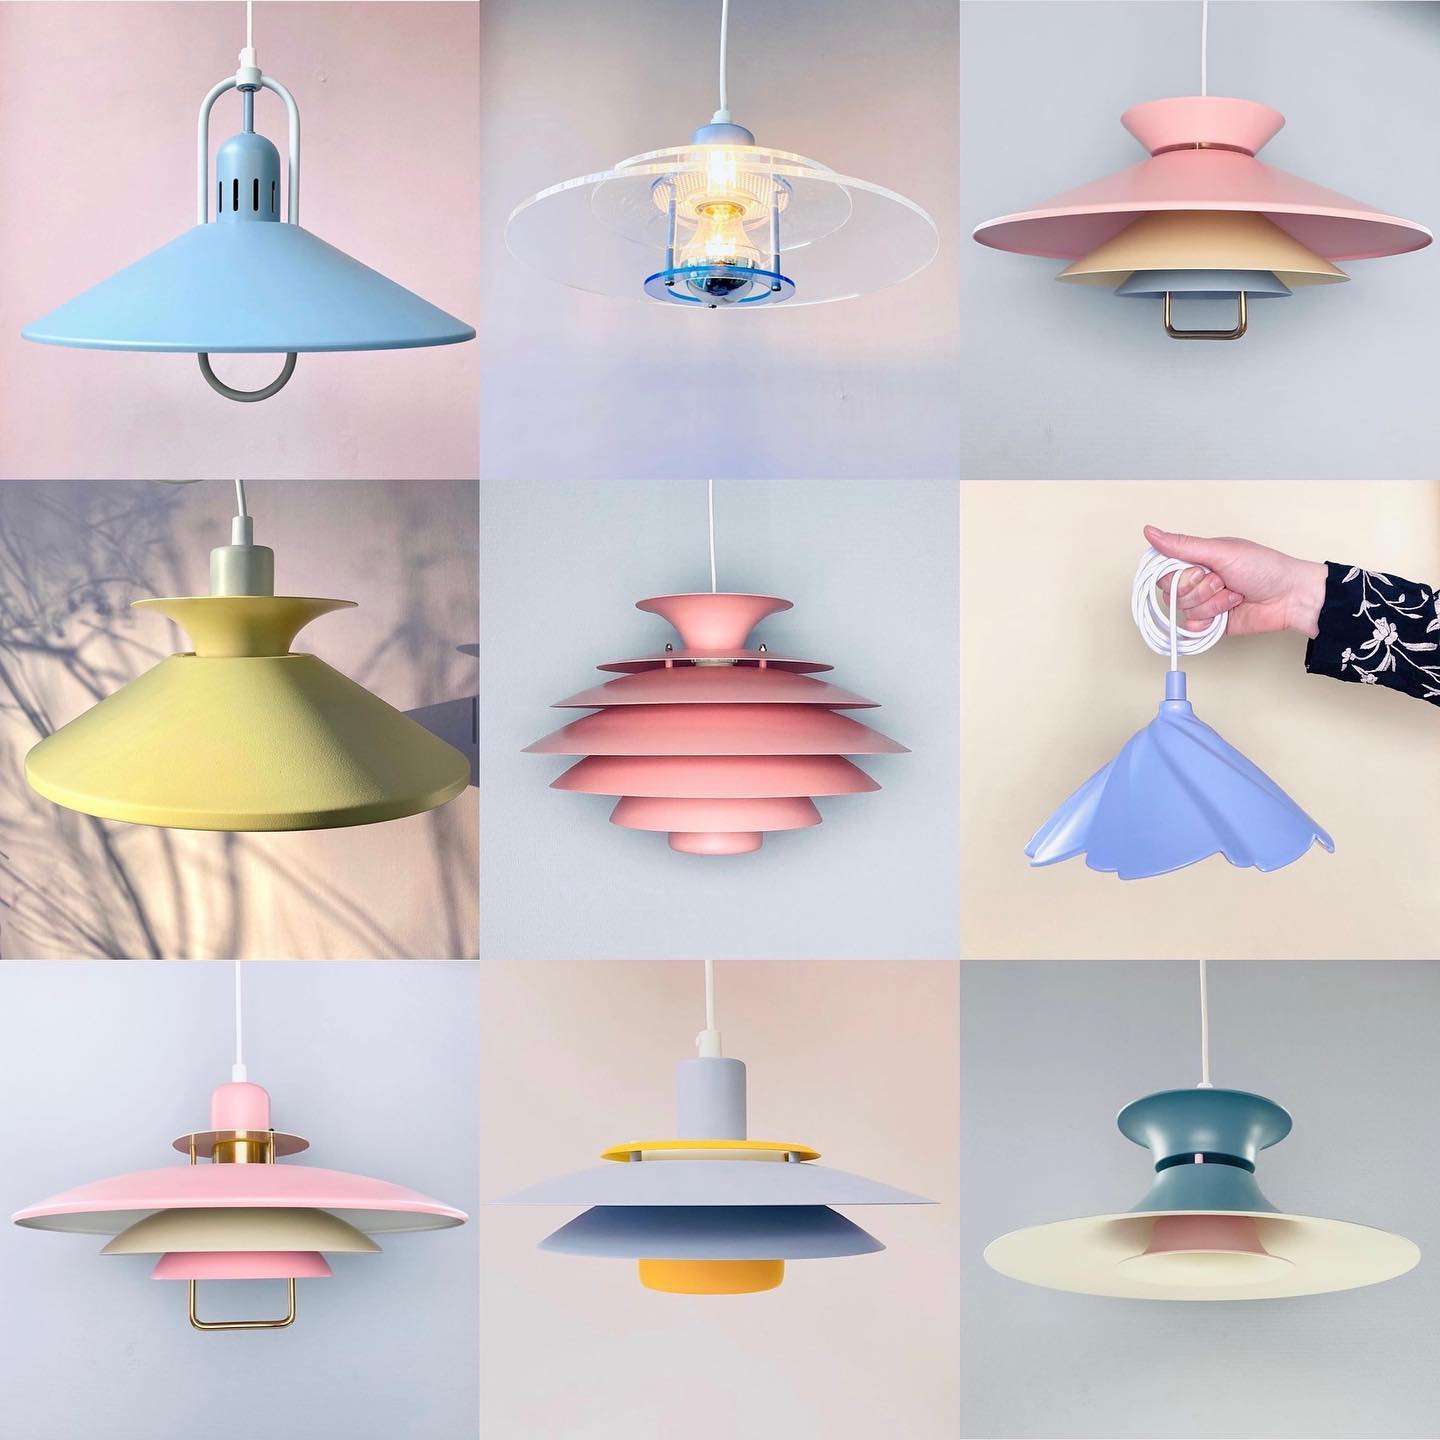 Danish Pastel aesthetic with handmade lamps